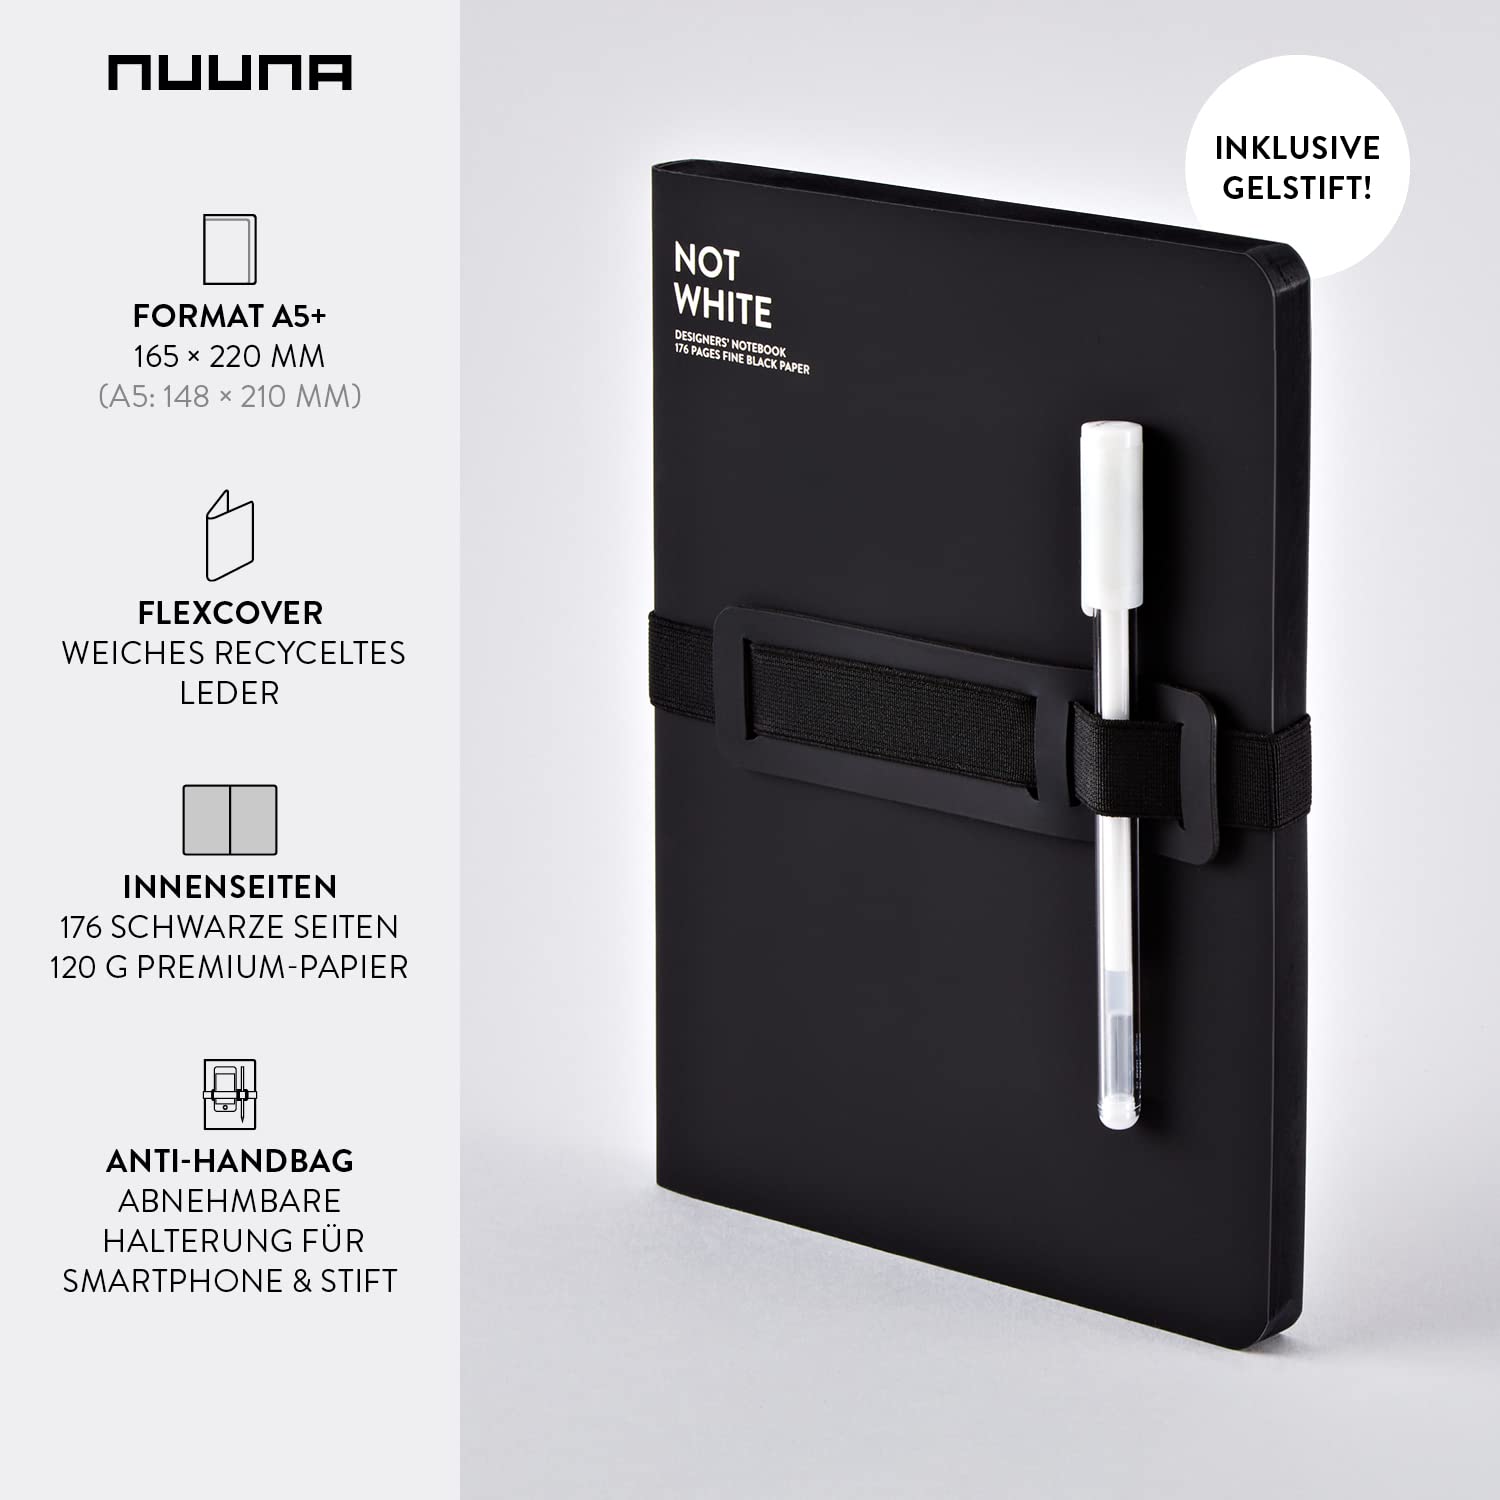 Nuuna Notebook Not White L Light BLACK